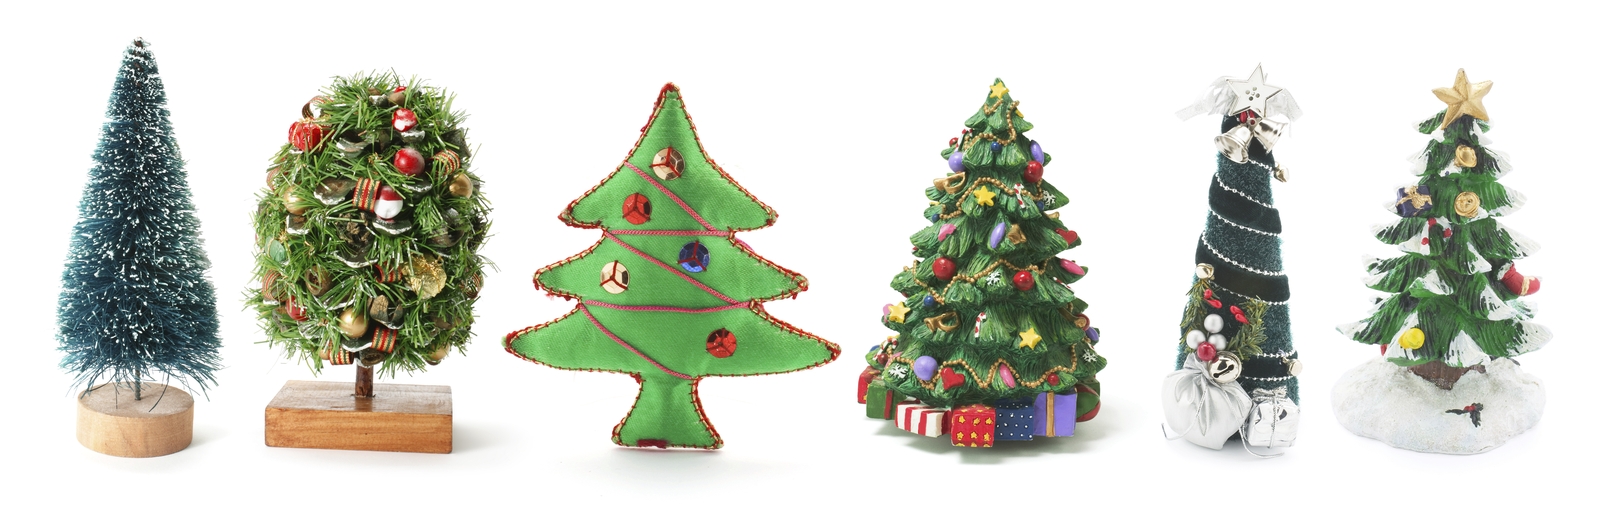 Christmas Tree Choices